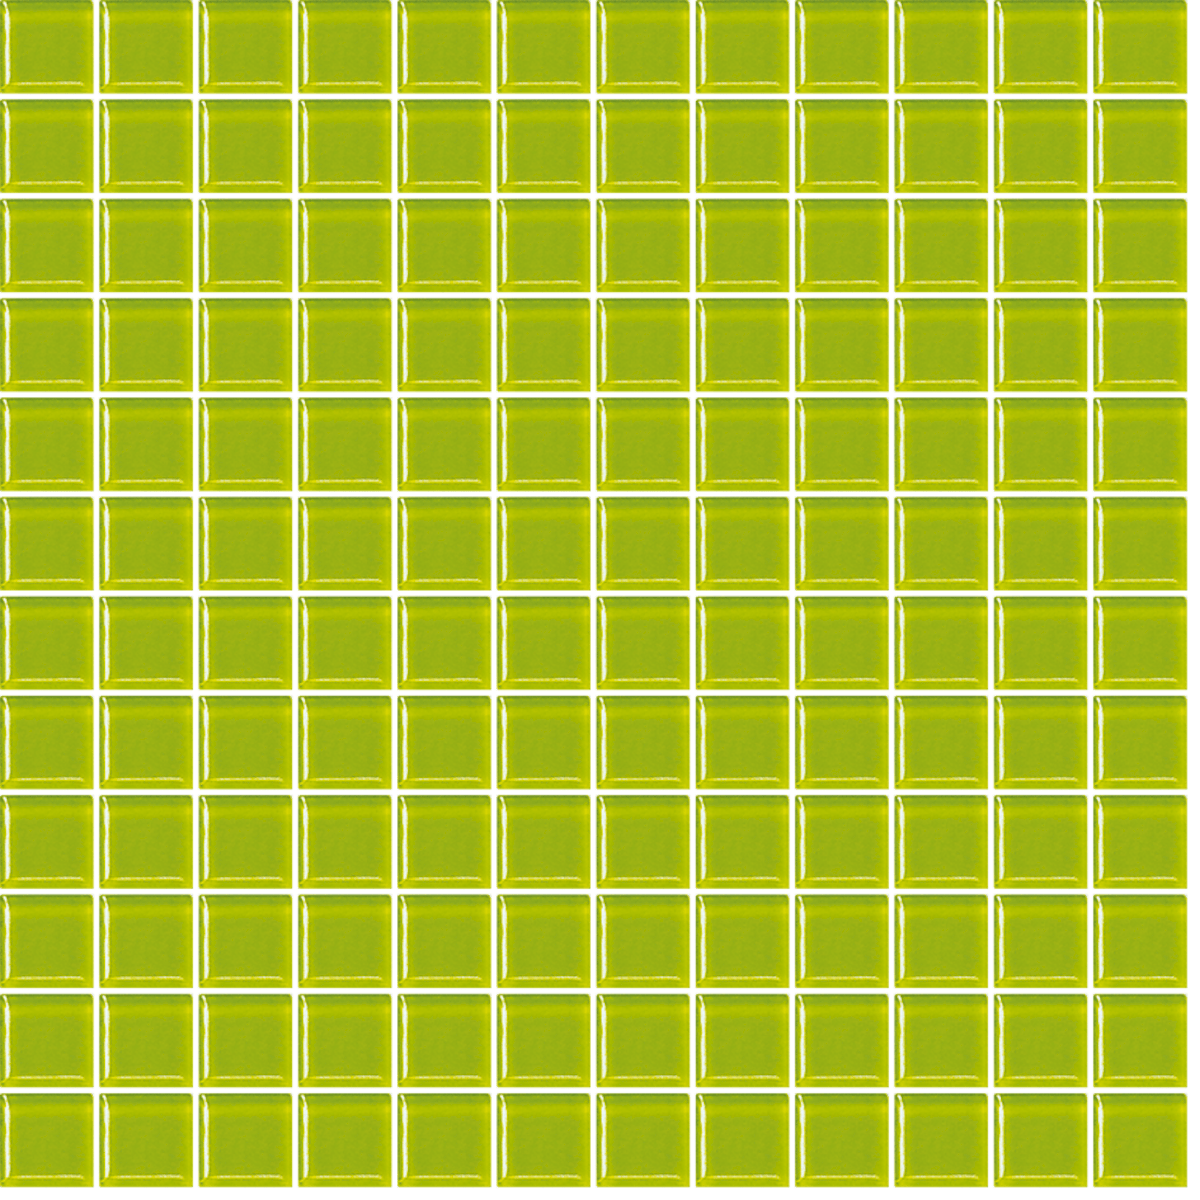 Skleněná mozaika Premium Mosaic zelená 30x30 cm lesk MOS25PI Premium Mosaic